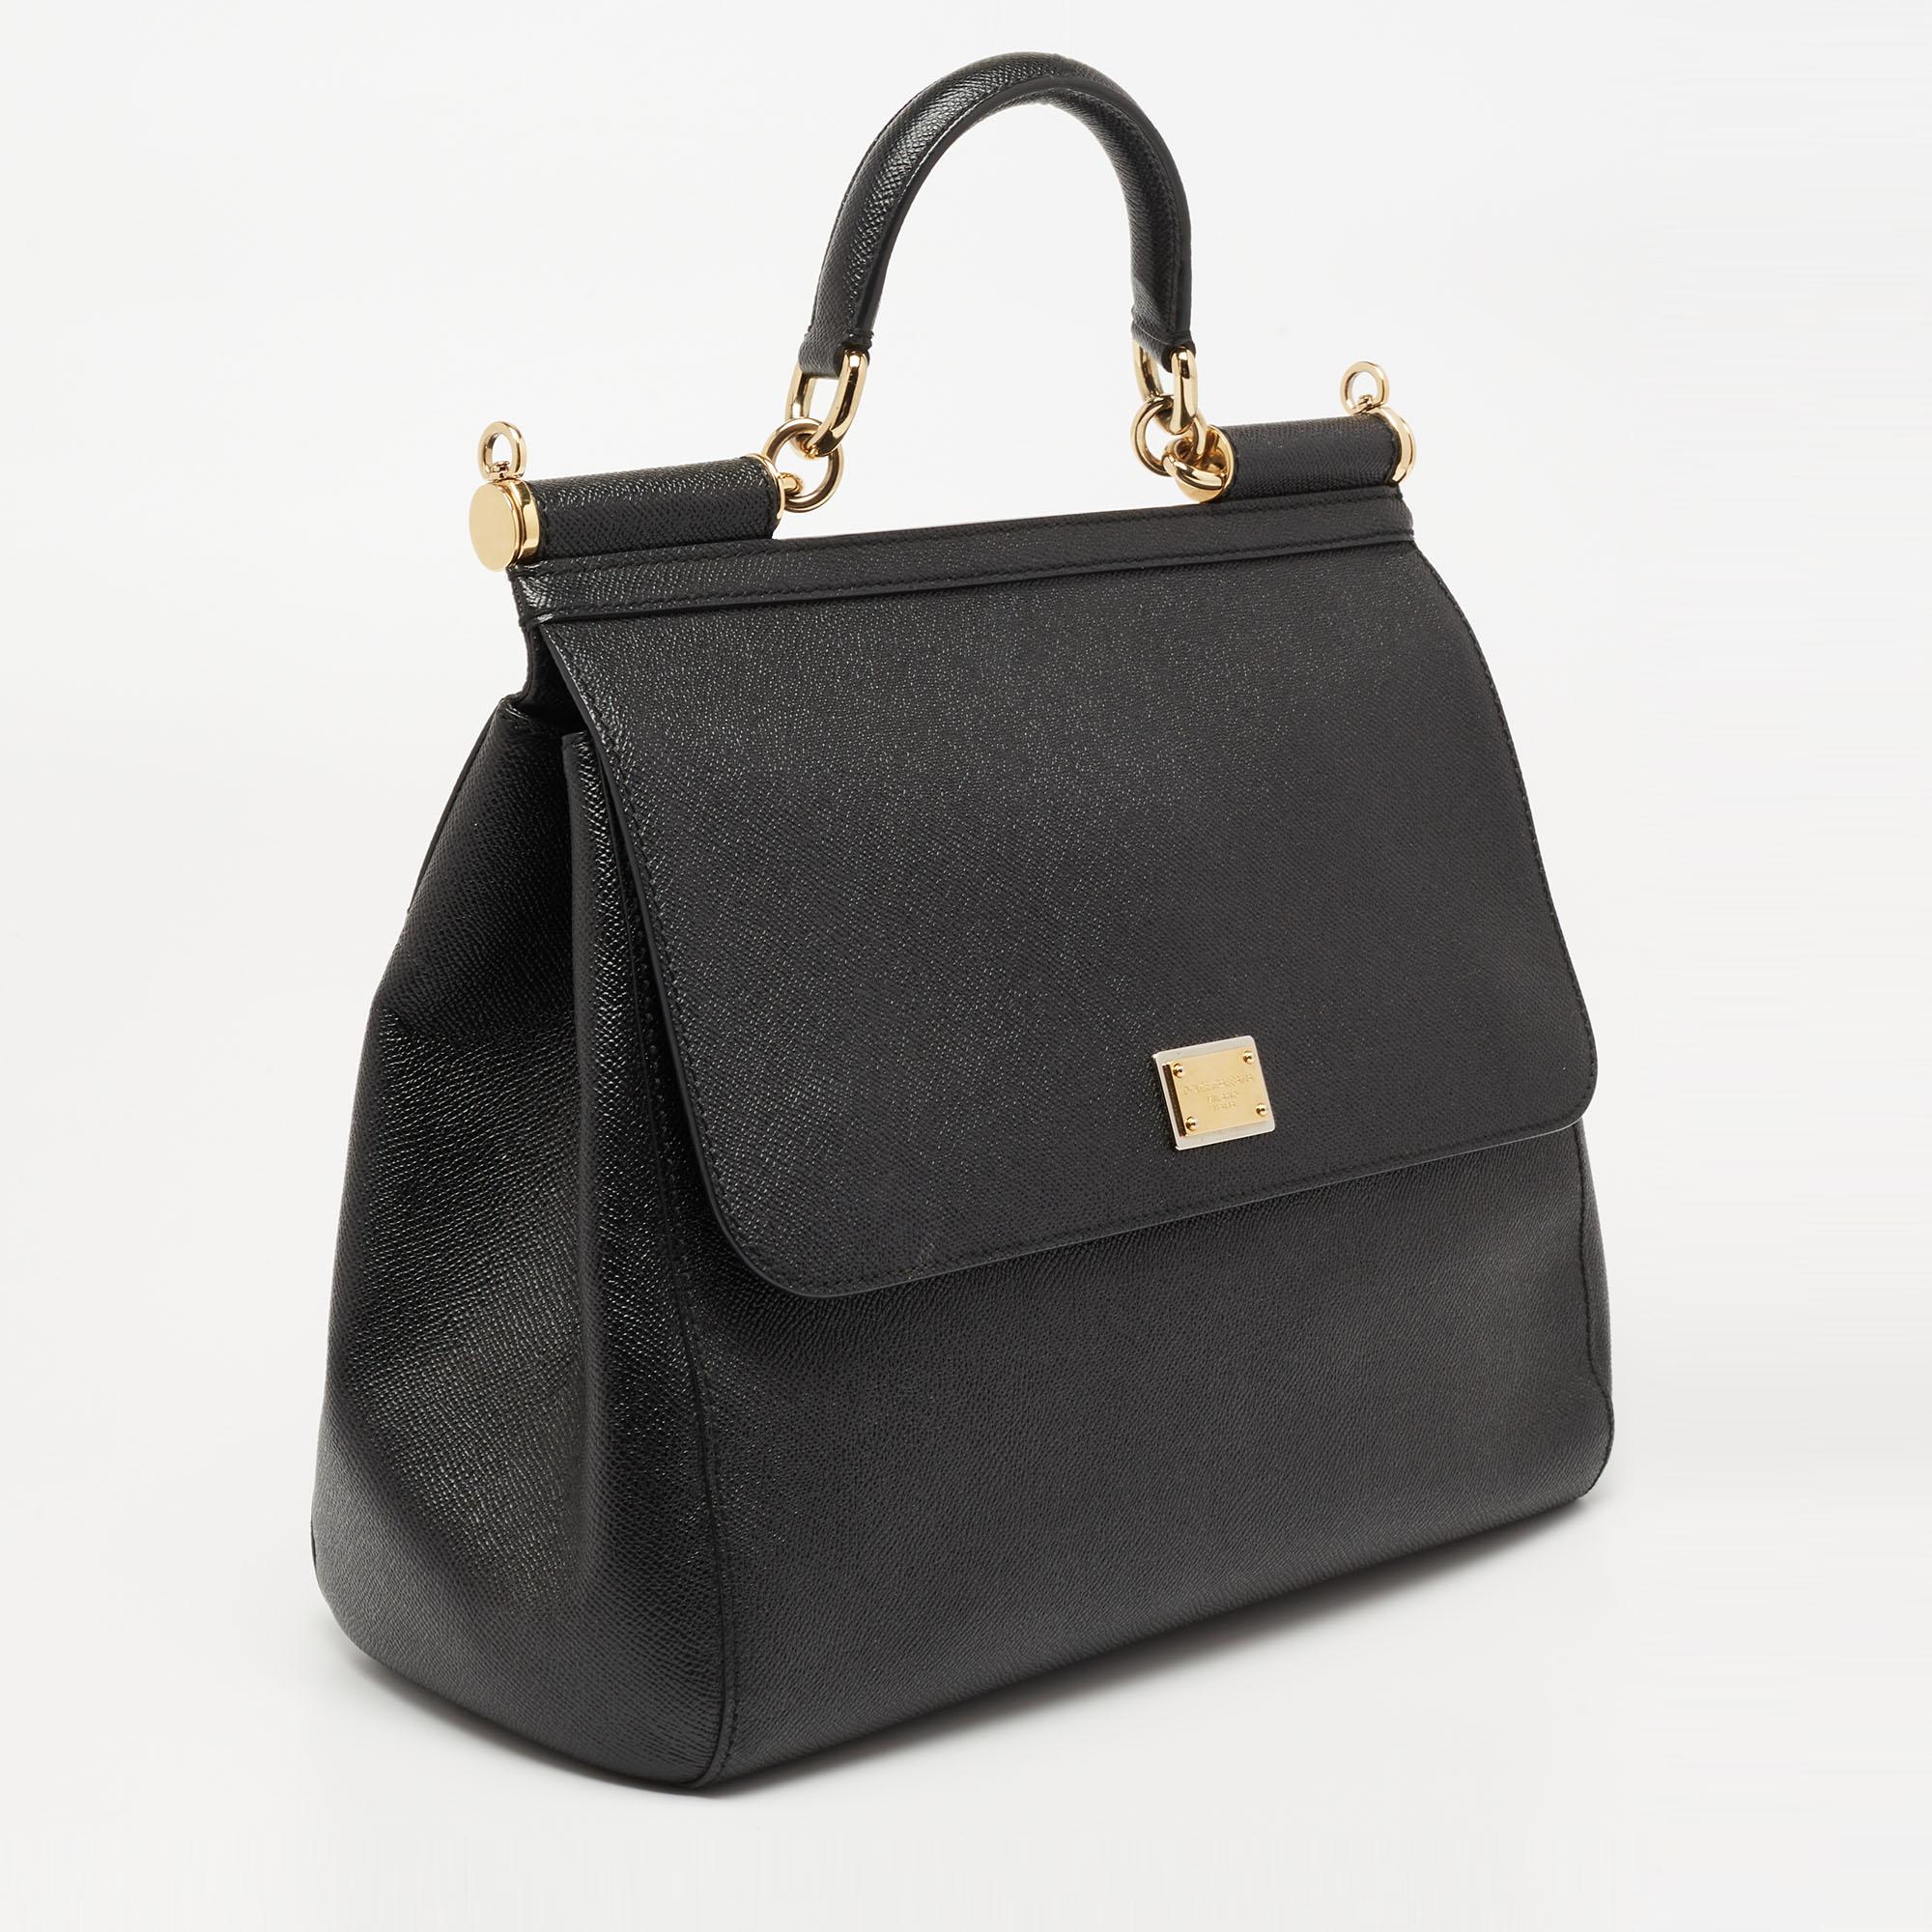 Dolce & Gabbana Black Leather Miss Sicily Top Handle Bag 2